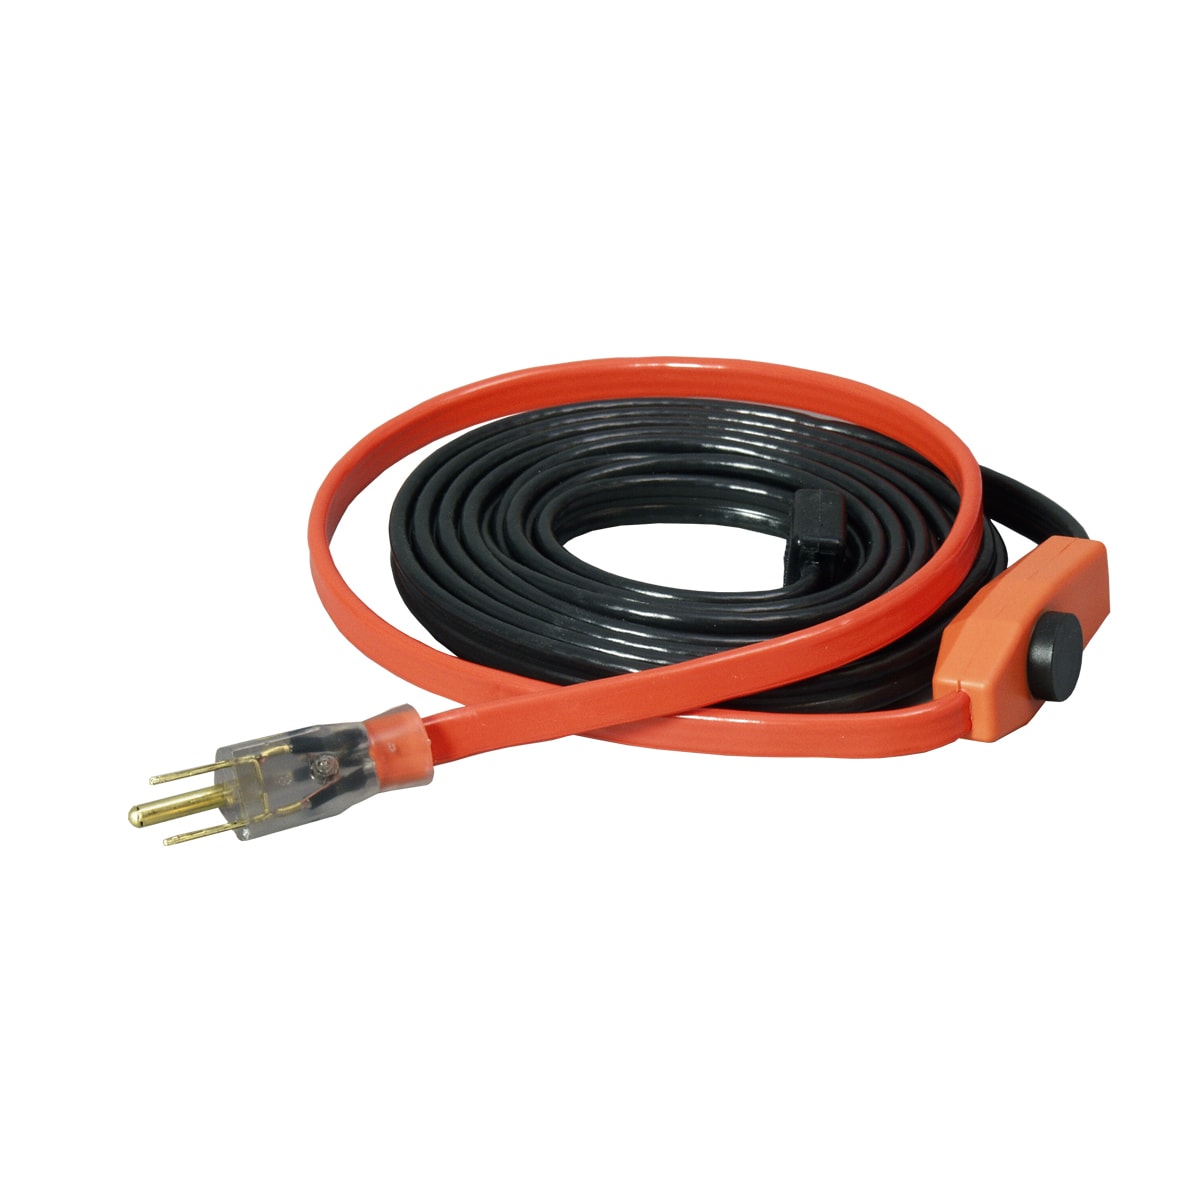 EasyHeat 10802 Freeze Free Cable Connector Kit,Orange : Automotive 